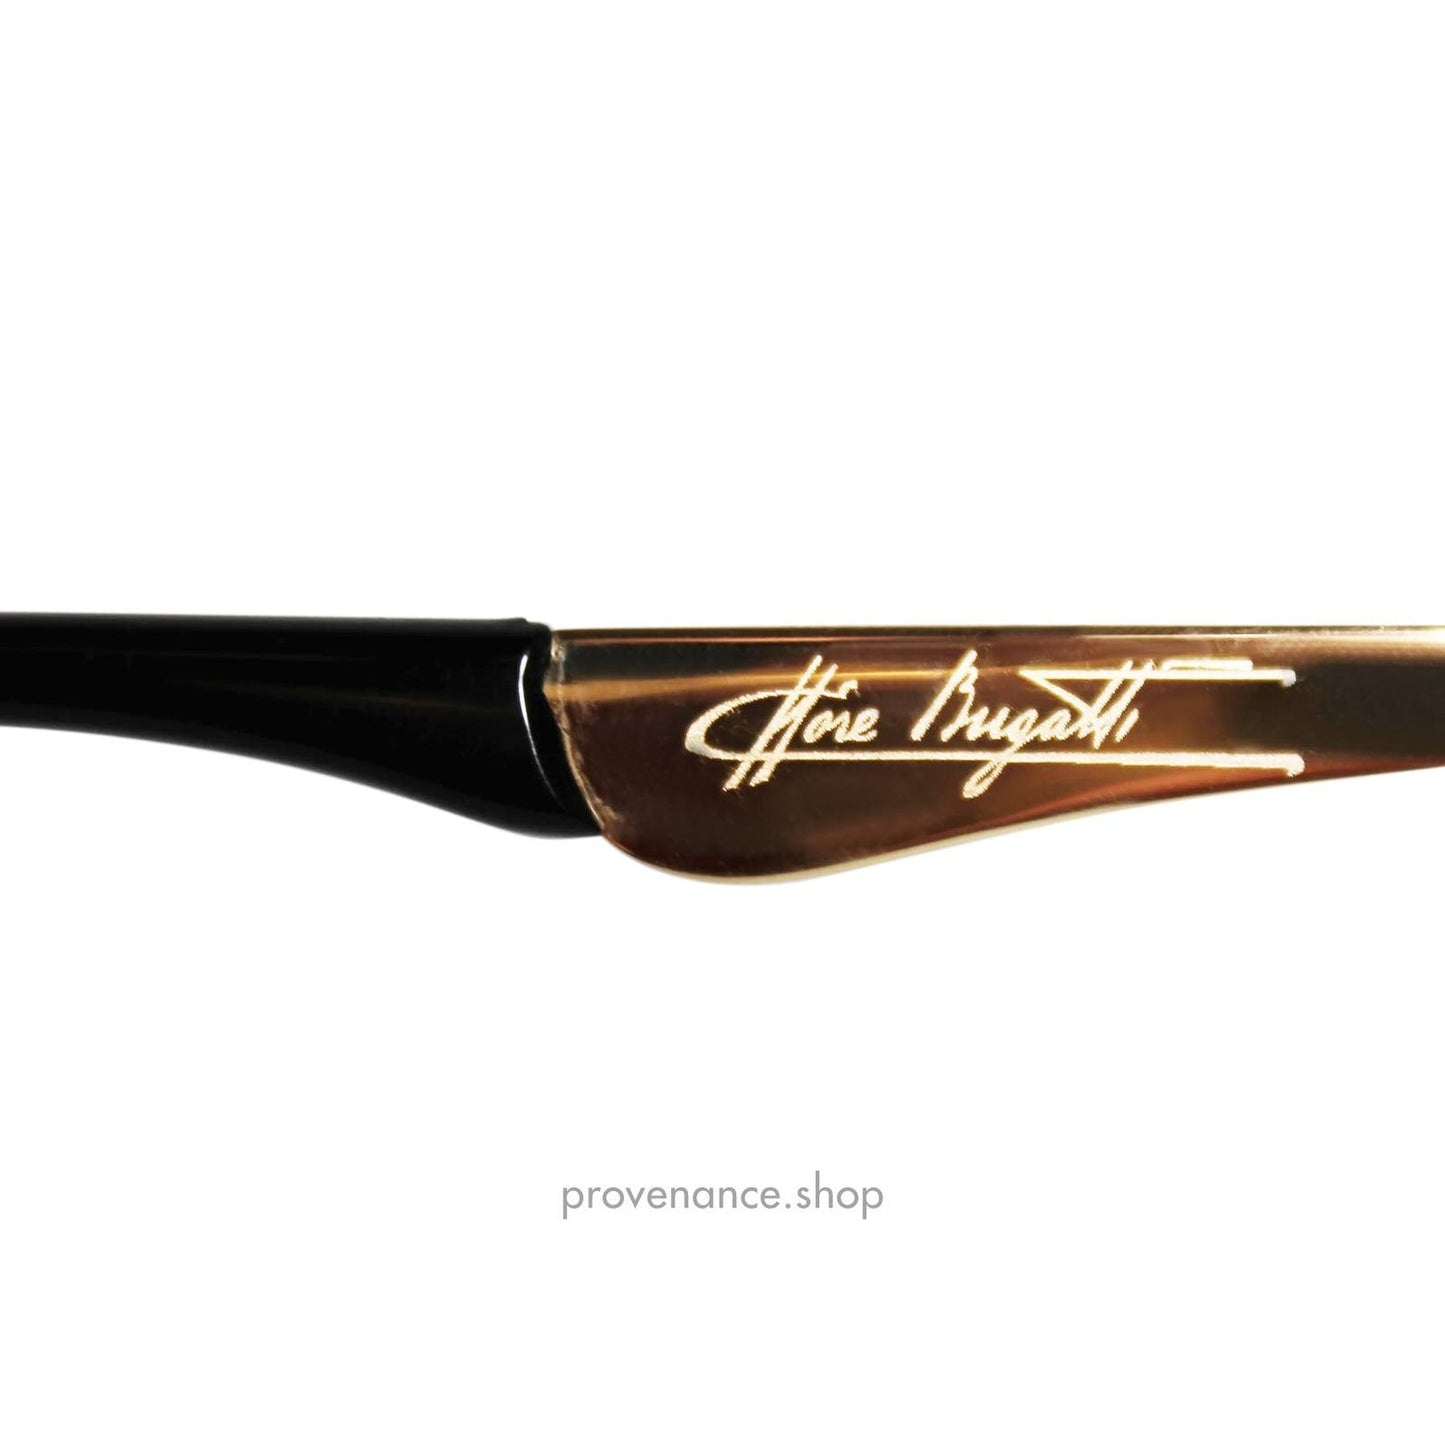 🔴 Bugatti Vintage 11711 DS NOS Sunglasses